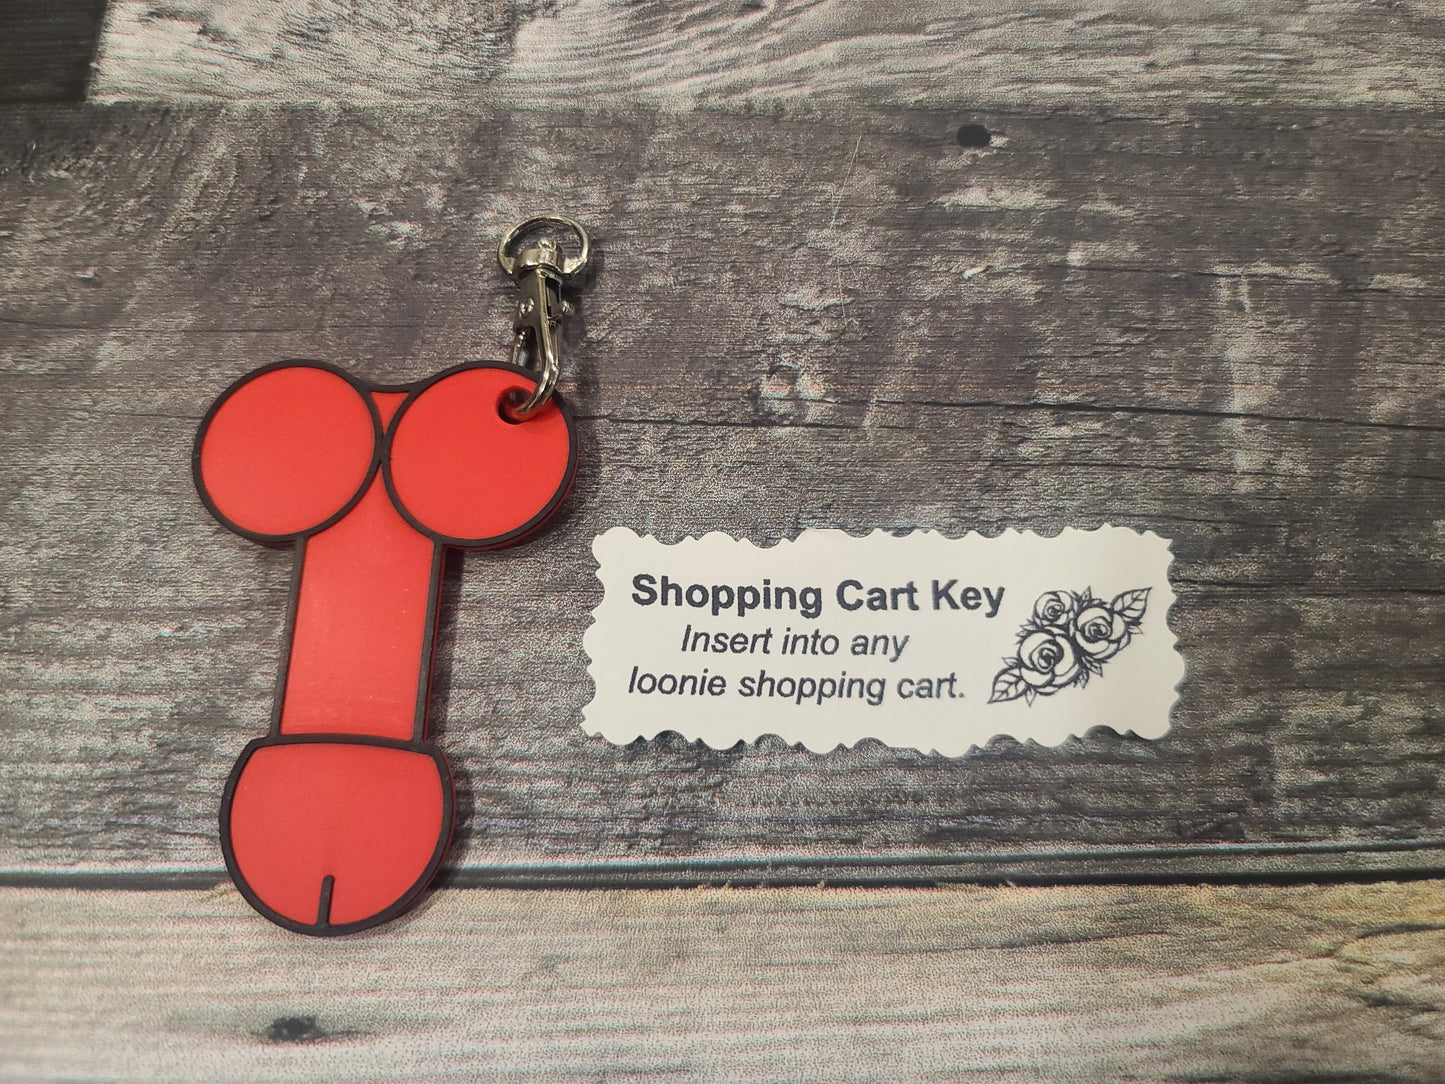 Dick/Penis $1 Shopping Cart Key